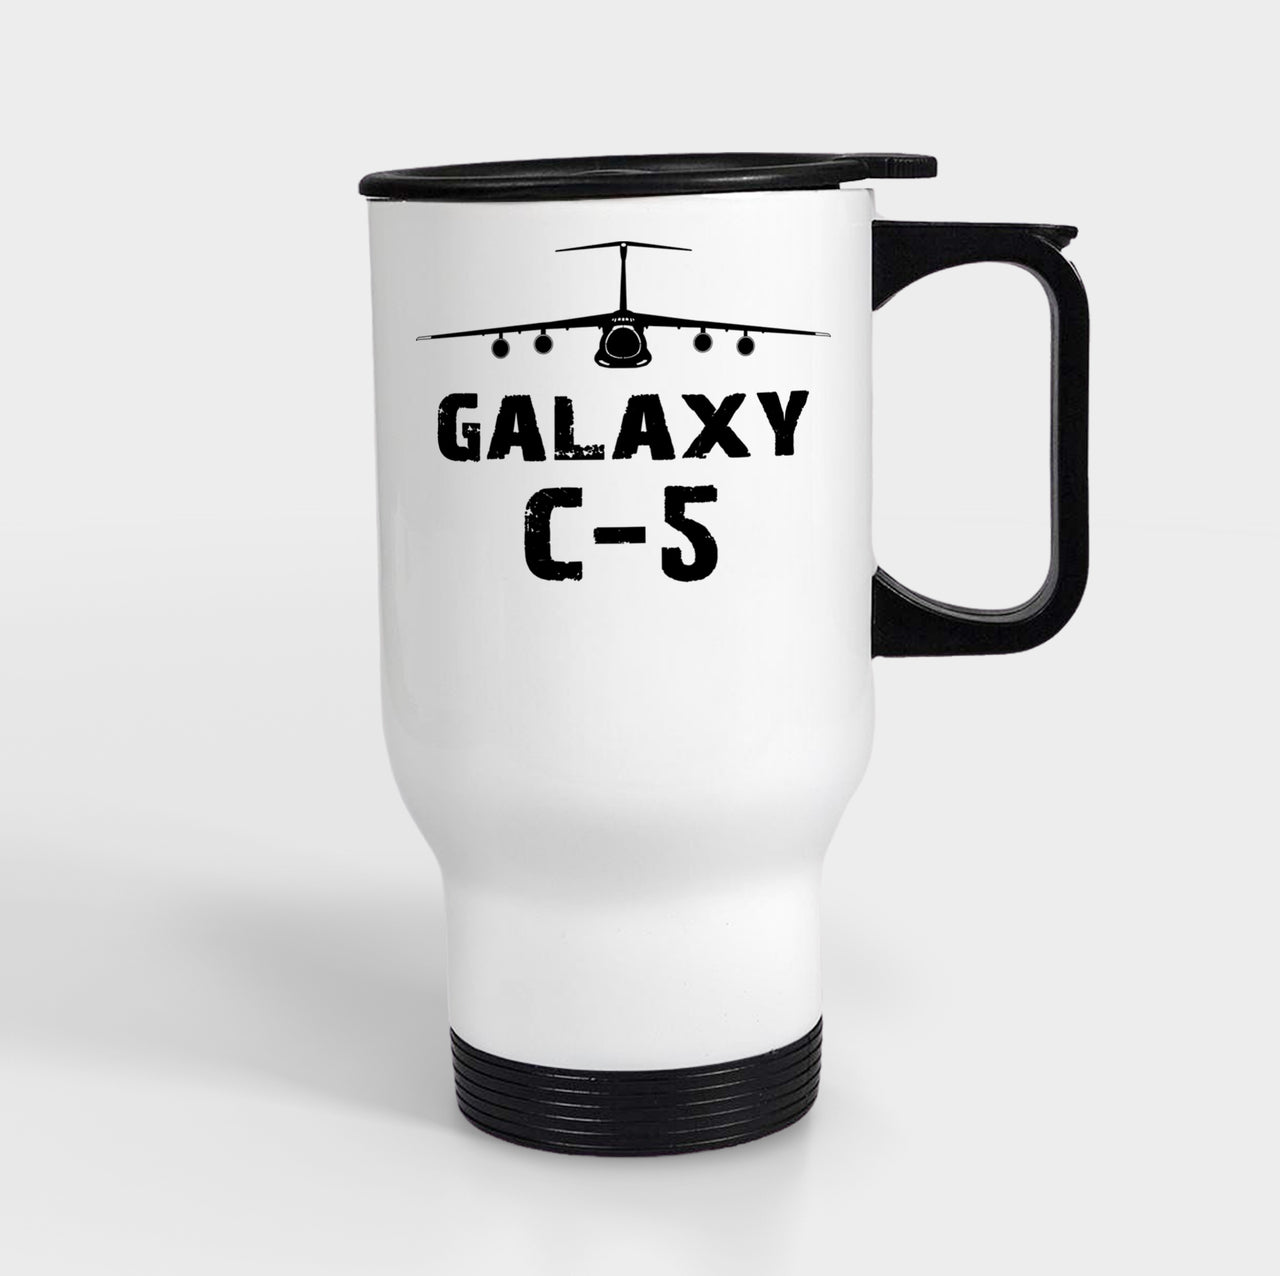 Galaxy C-5 & Plane Designed Travel Mugs (With Holder)